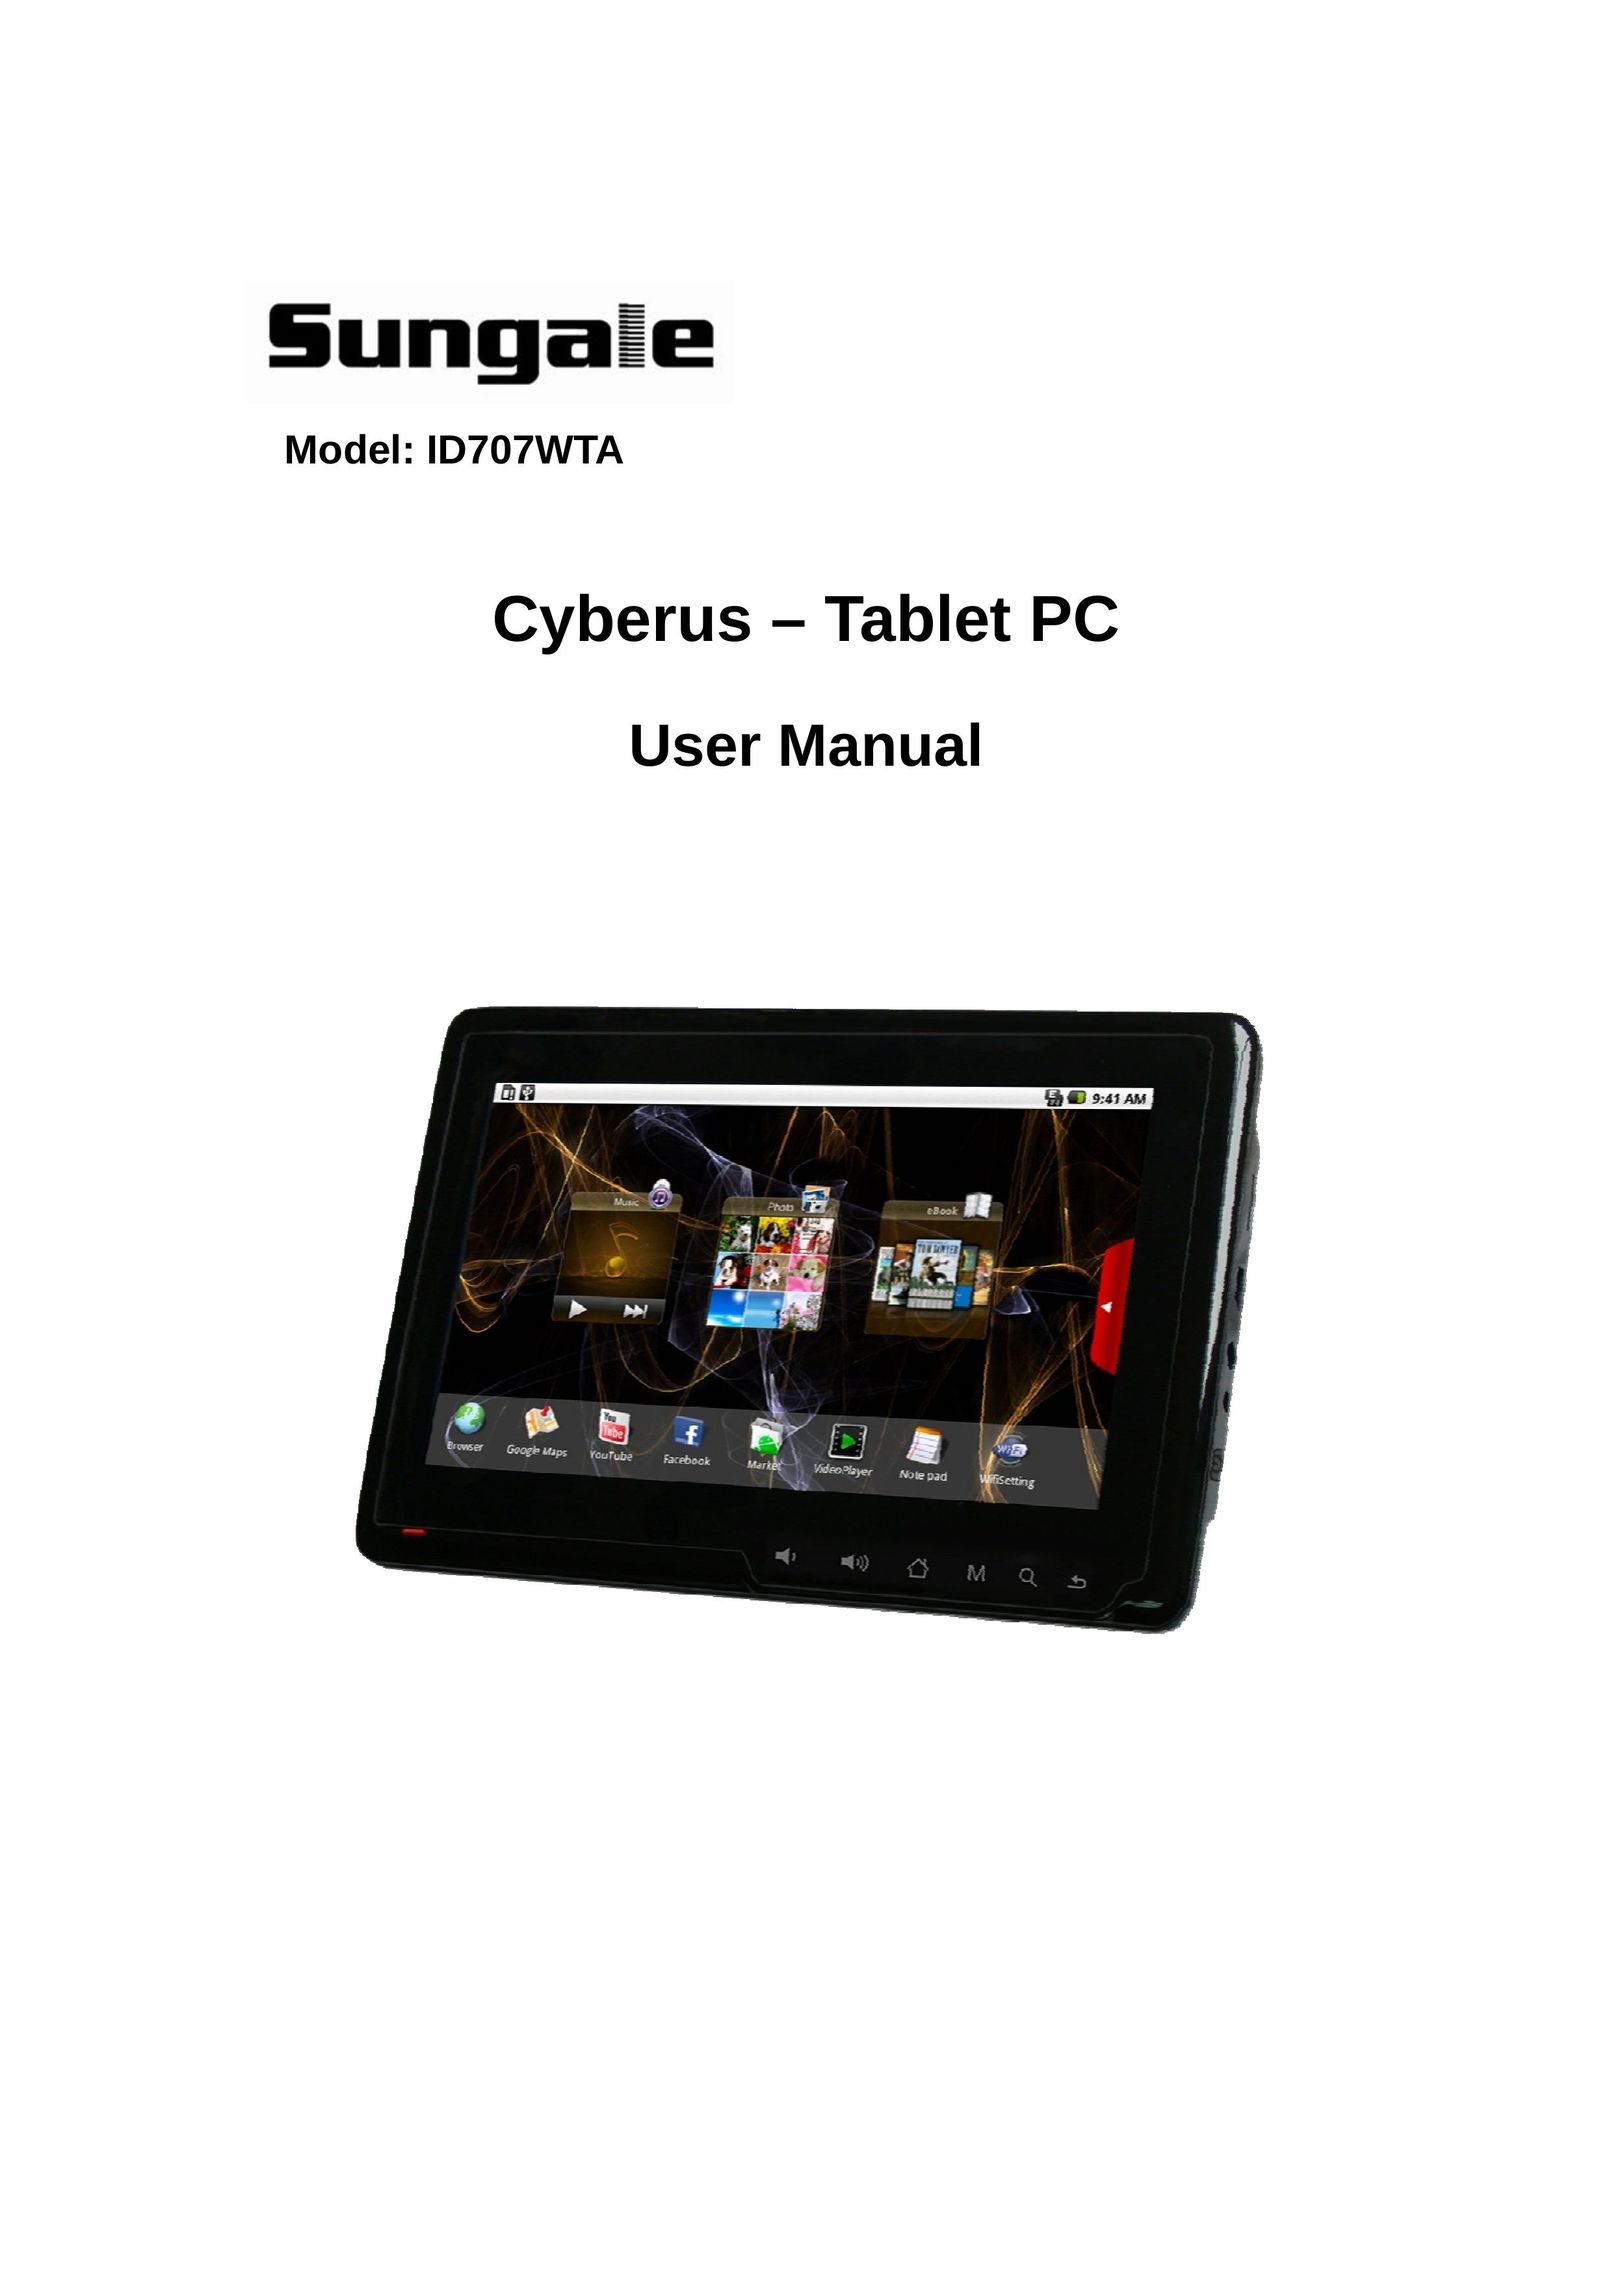 Sungale ID707WTA Tablet User Manual